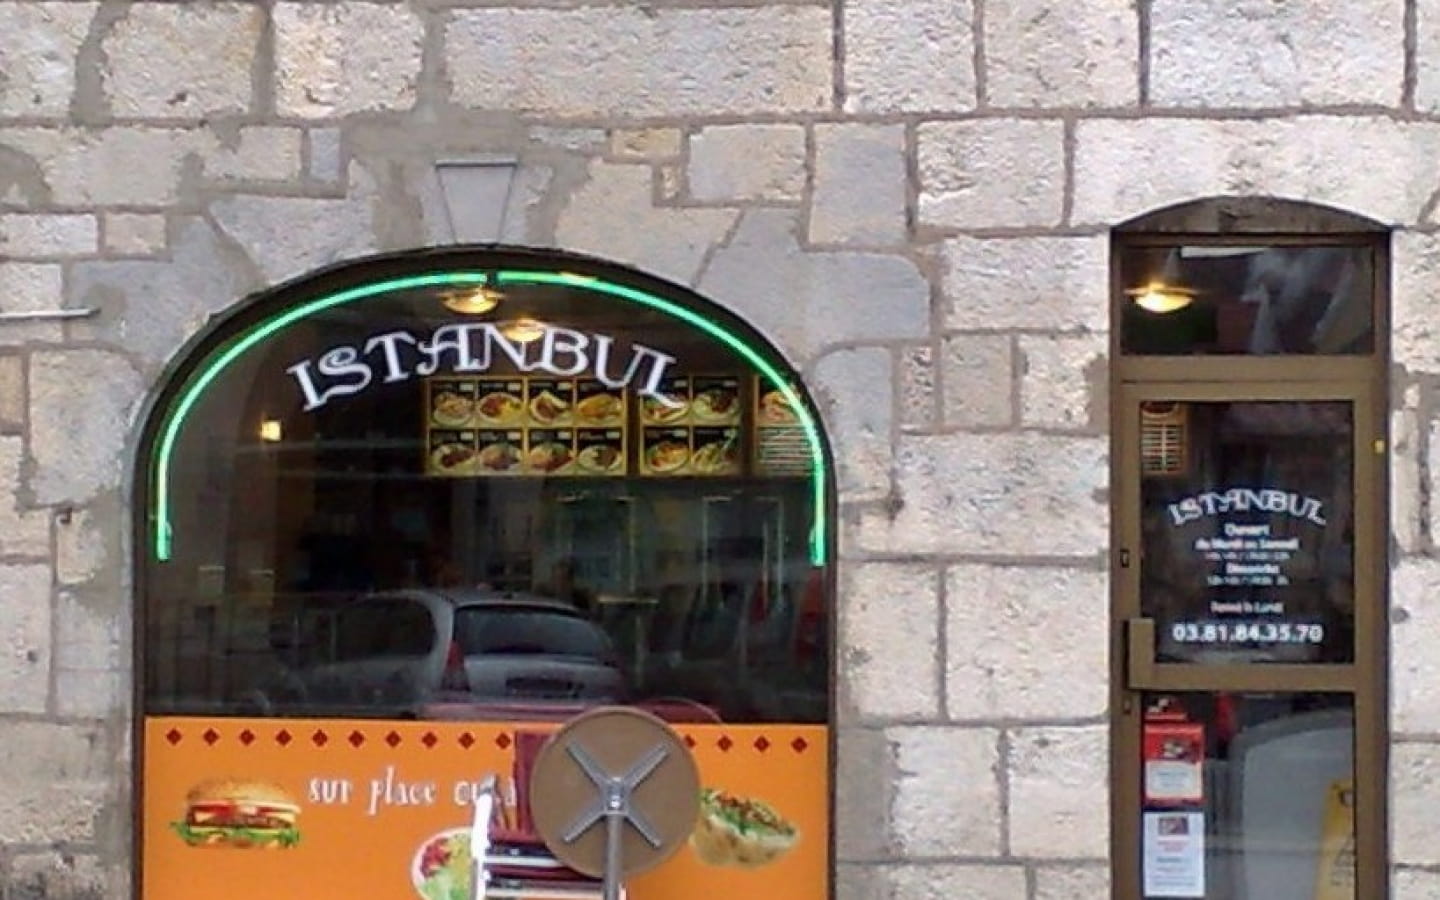 Istanbul kebab